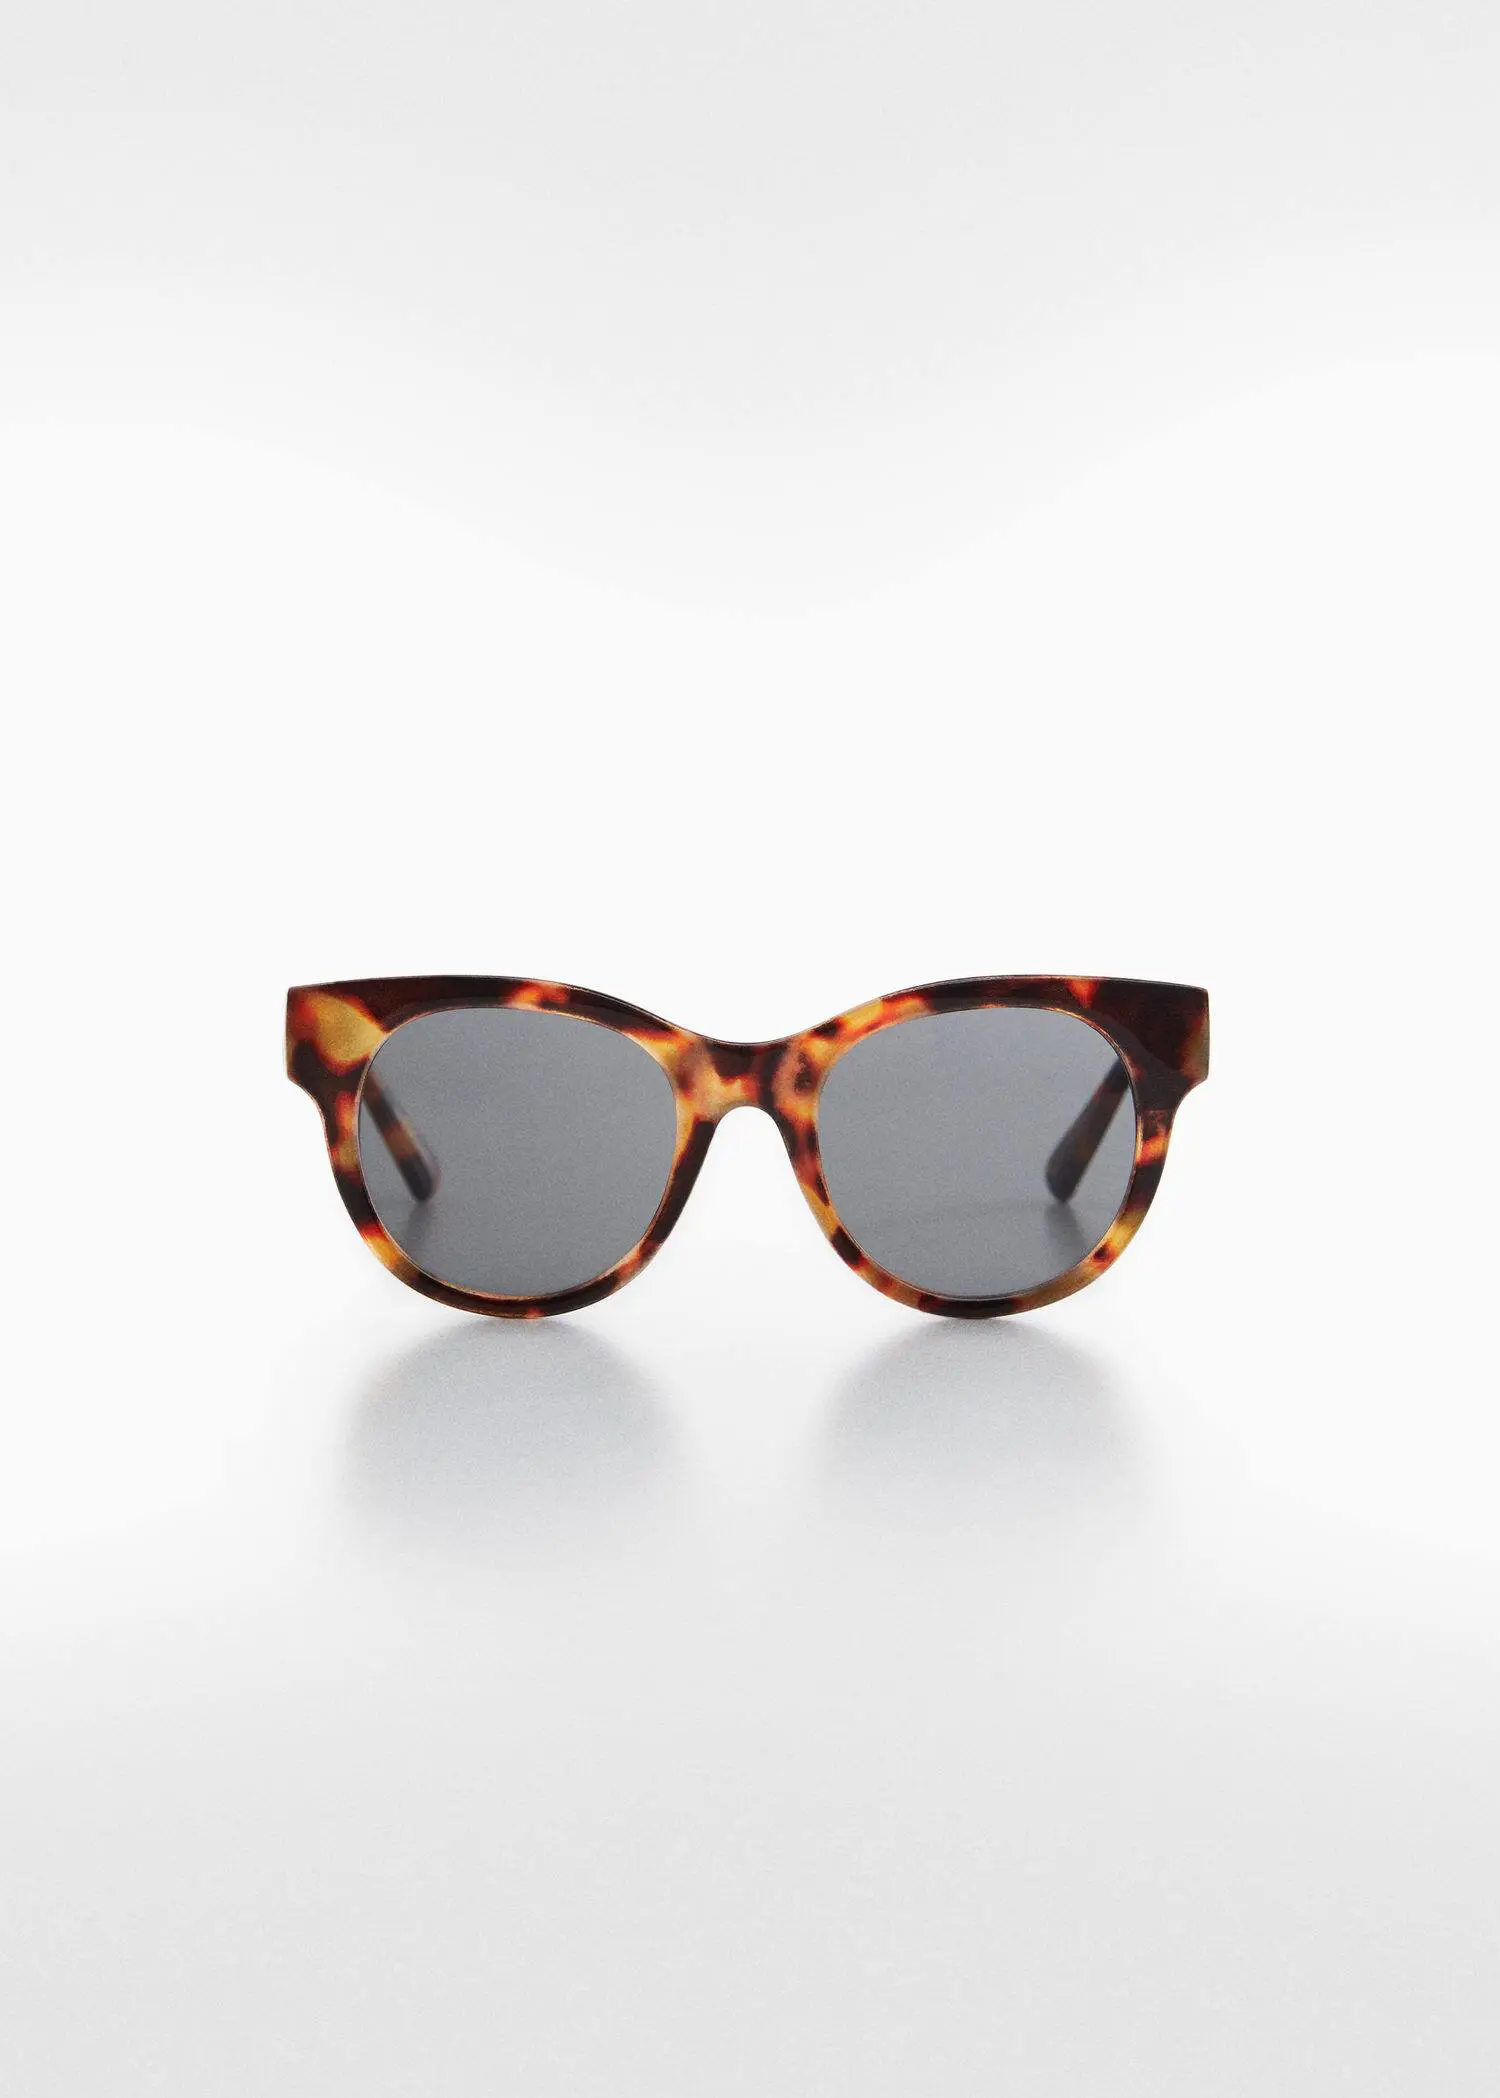 Mango Tortoiseshell sunglasses. a pair of sunglasses sitting on top of a white table. 